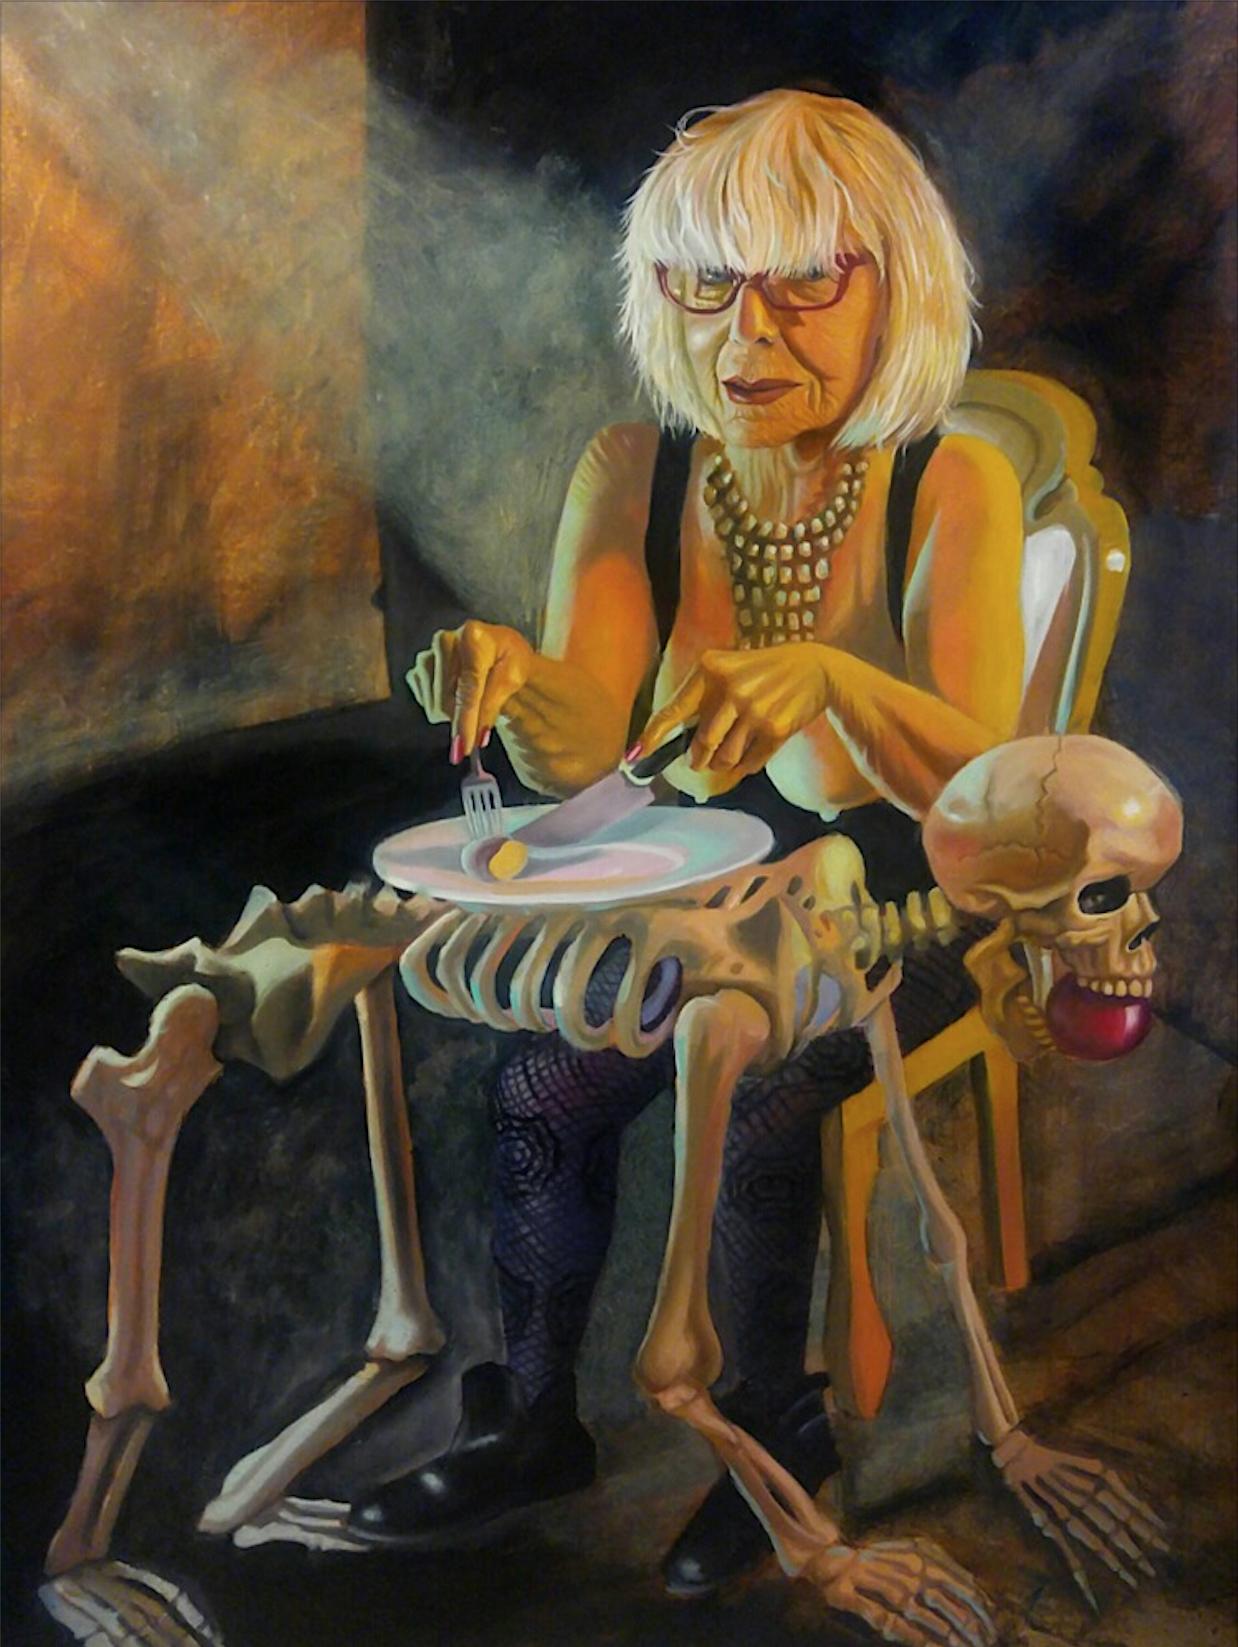 Tslil Tsemet Portrait Painting - "YOU ALWAYS HURT THE ONE YOU LOVE", surrealist oil painting, skeleton, family